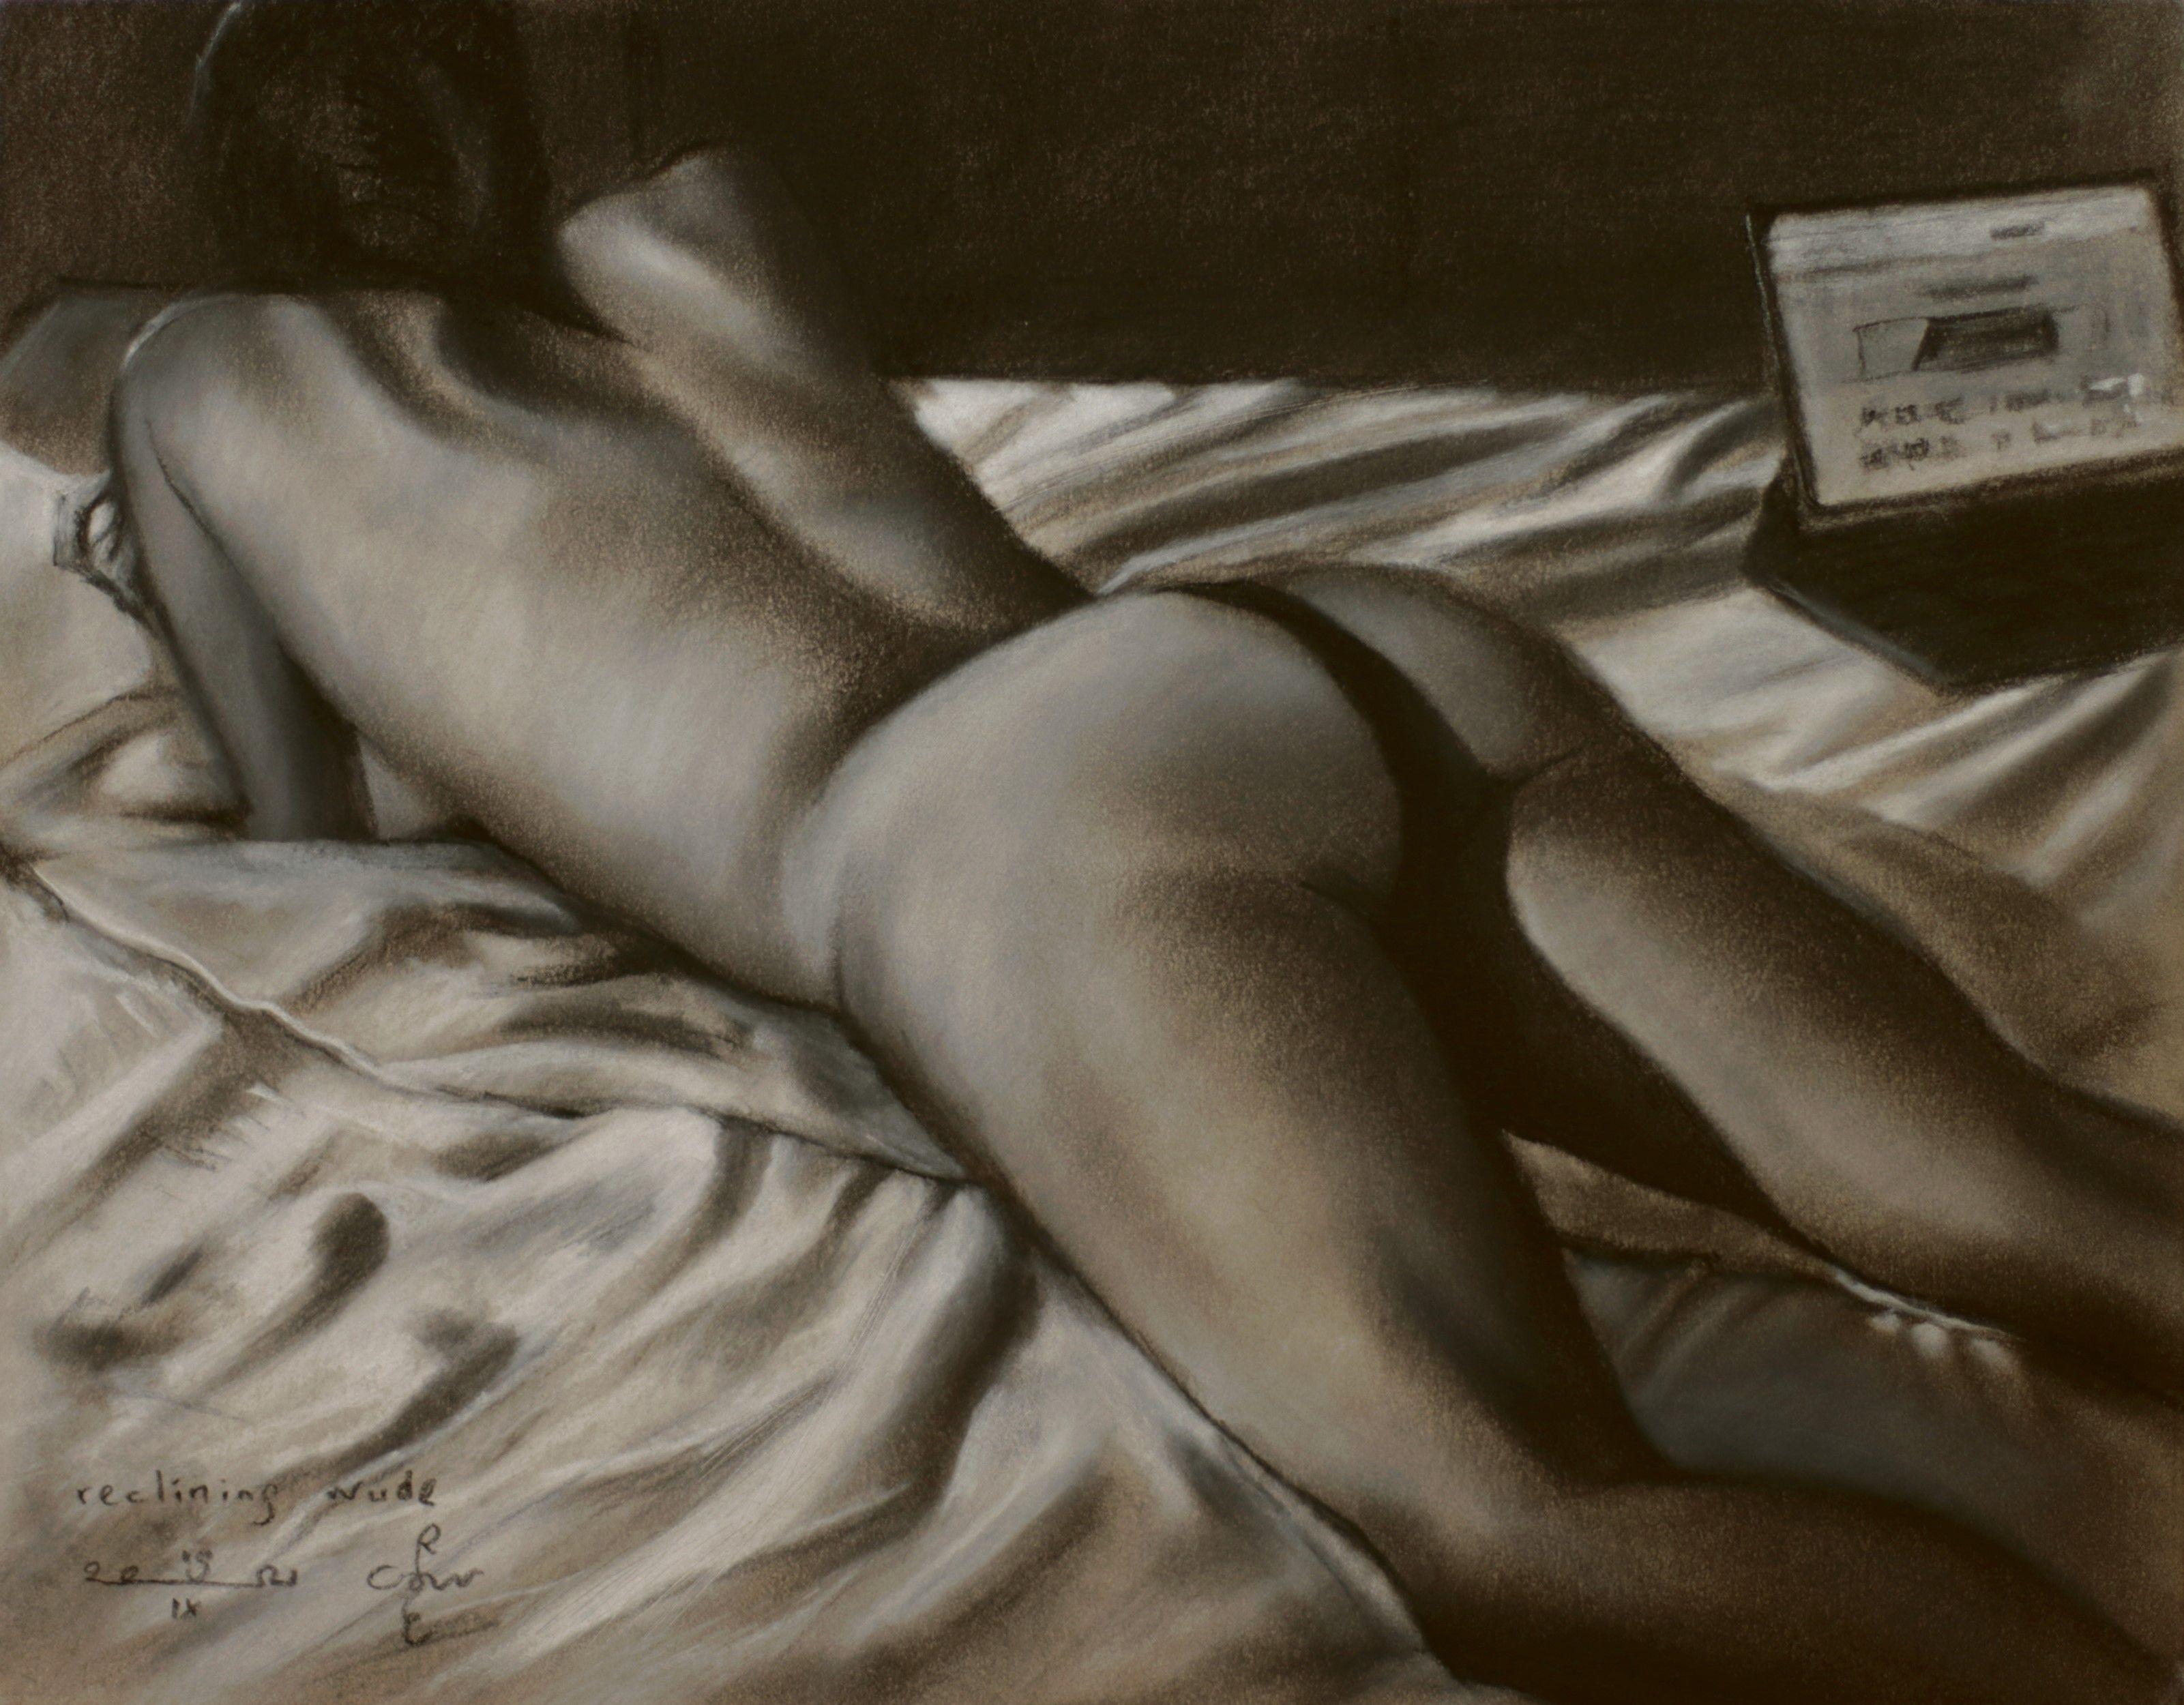 Reclining Nude â€“ 19-09-21, Drawing, Pastels on Paper - Art by Corne Akkers